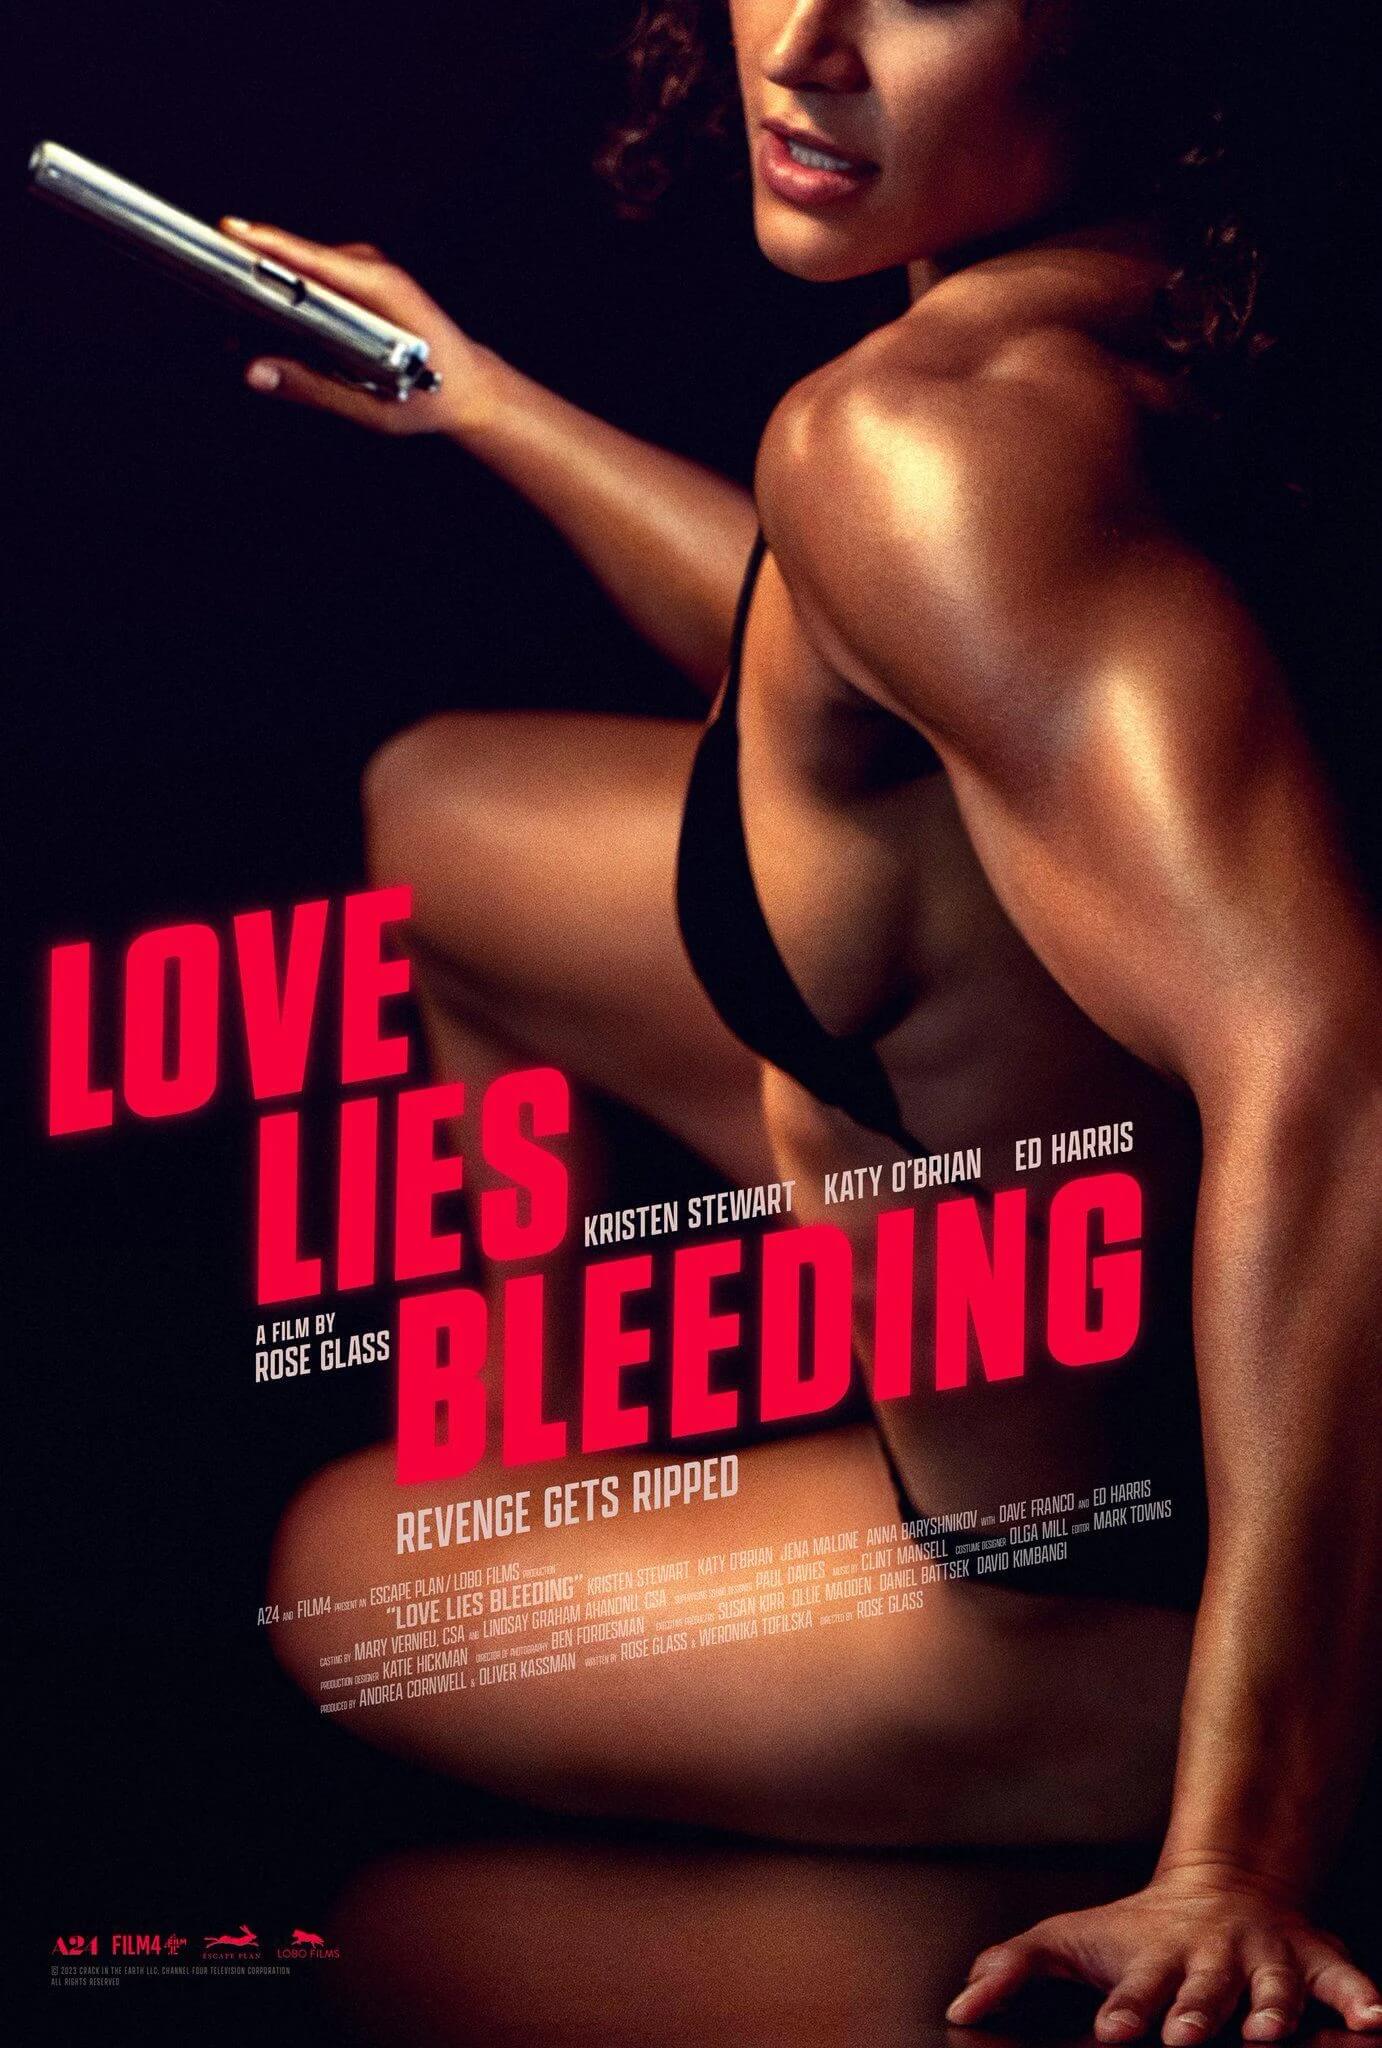 Love Lies Bleeding, primo trailer del film con Kristen Stewart che si innamora di una bodybuilder - Love Lies Bleeding - Gay.it